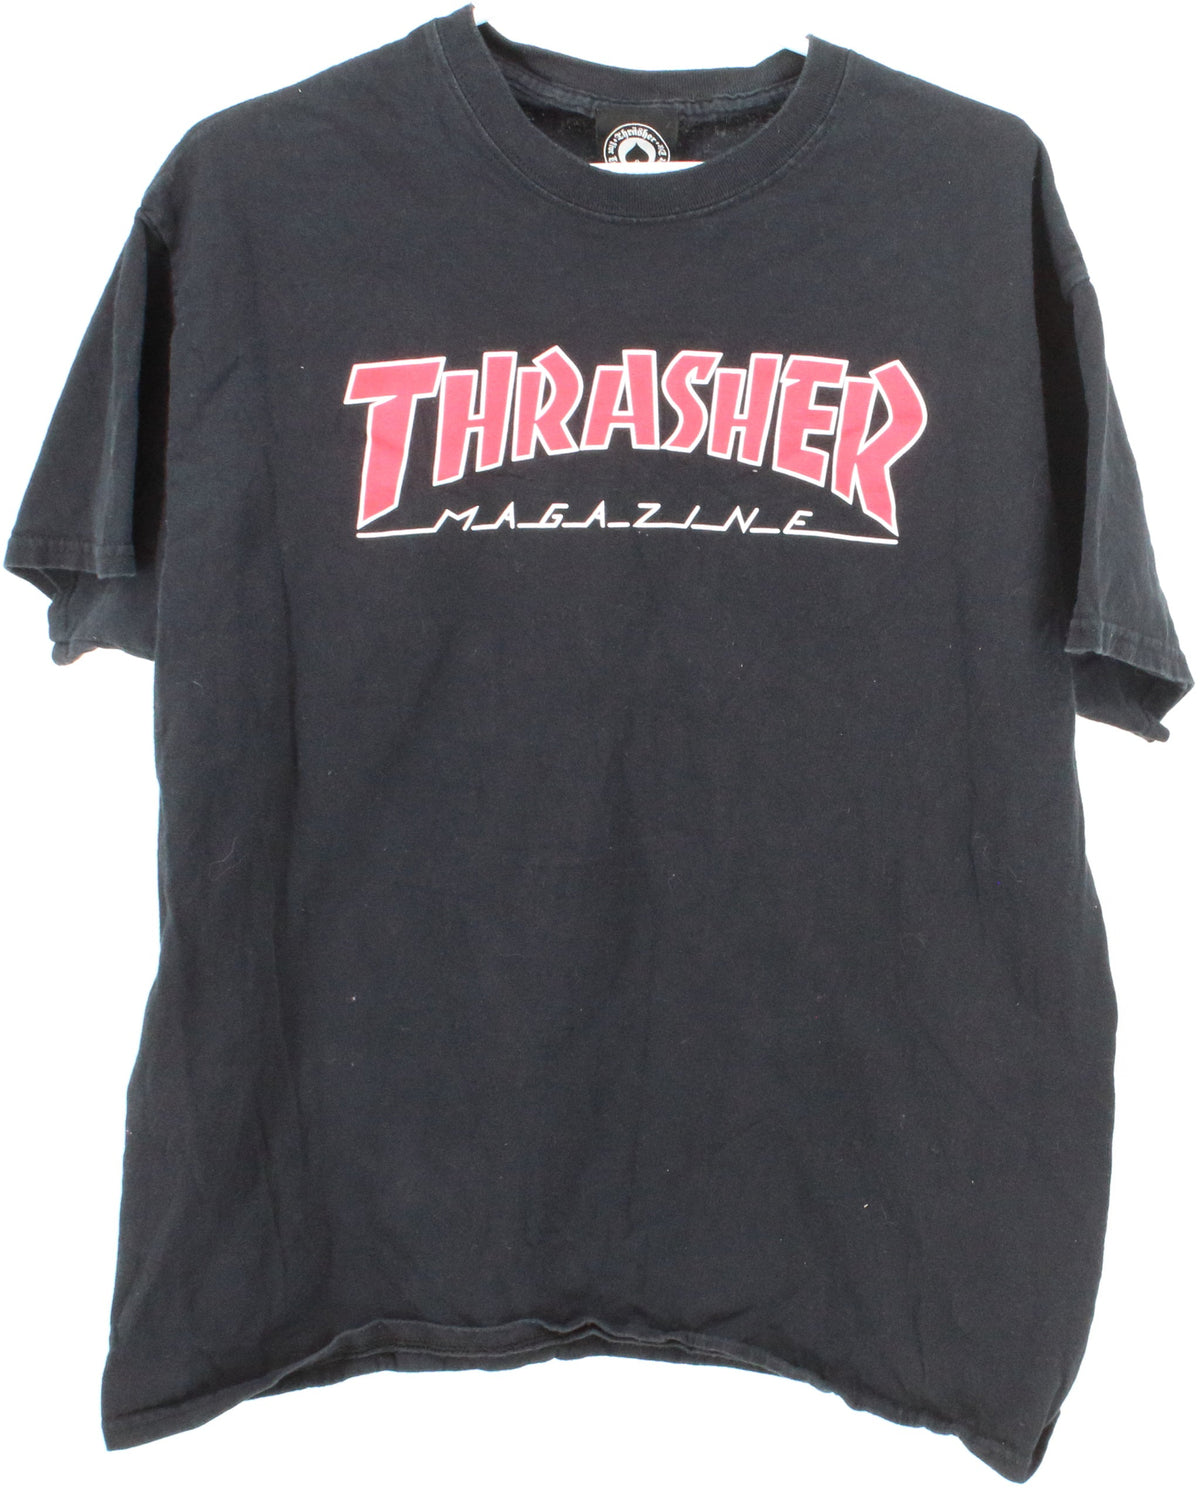 San Francisco Thrasher Magazine Black T-Shirt